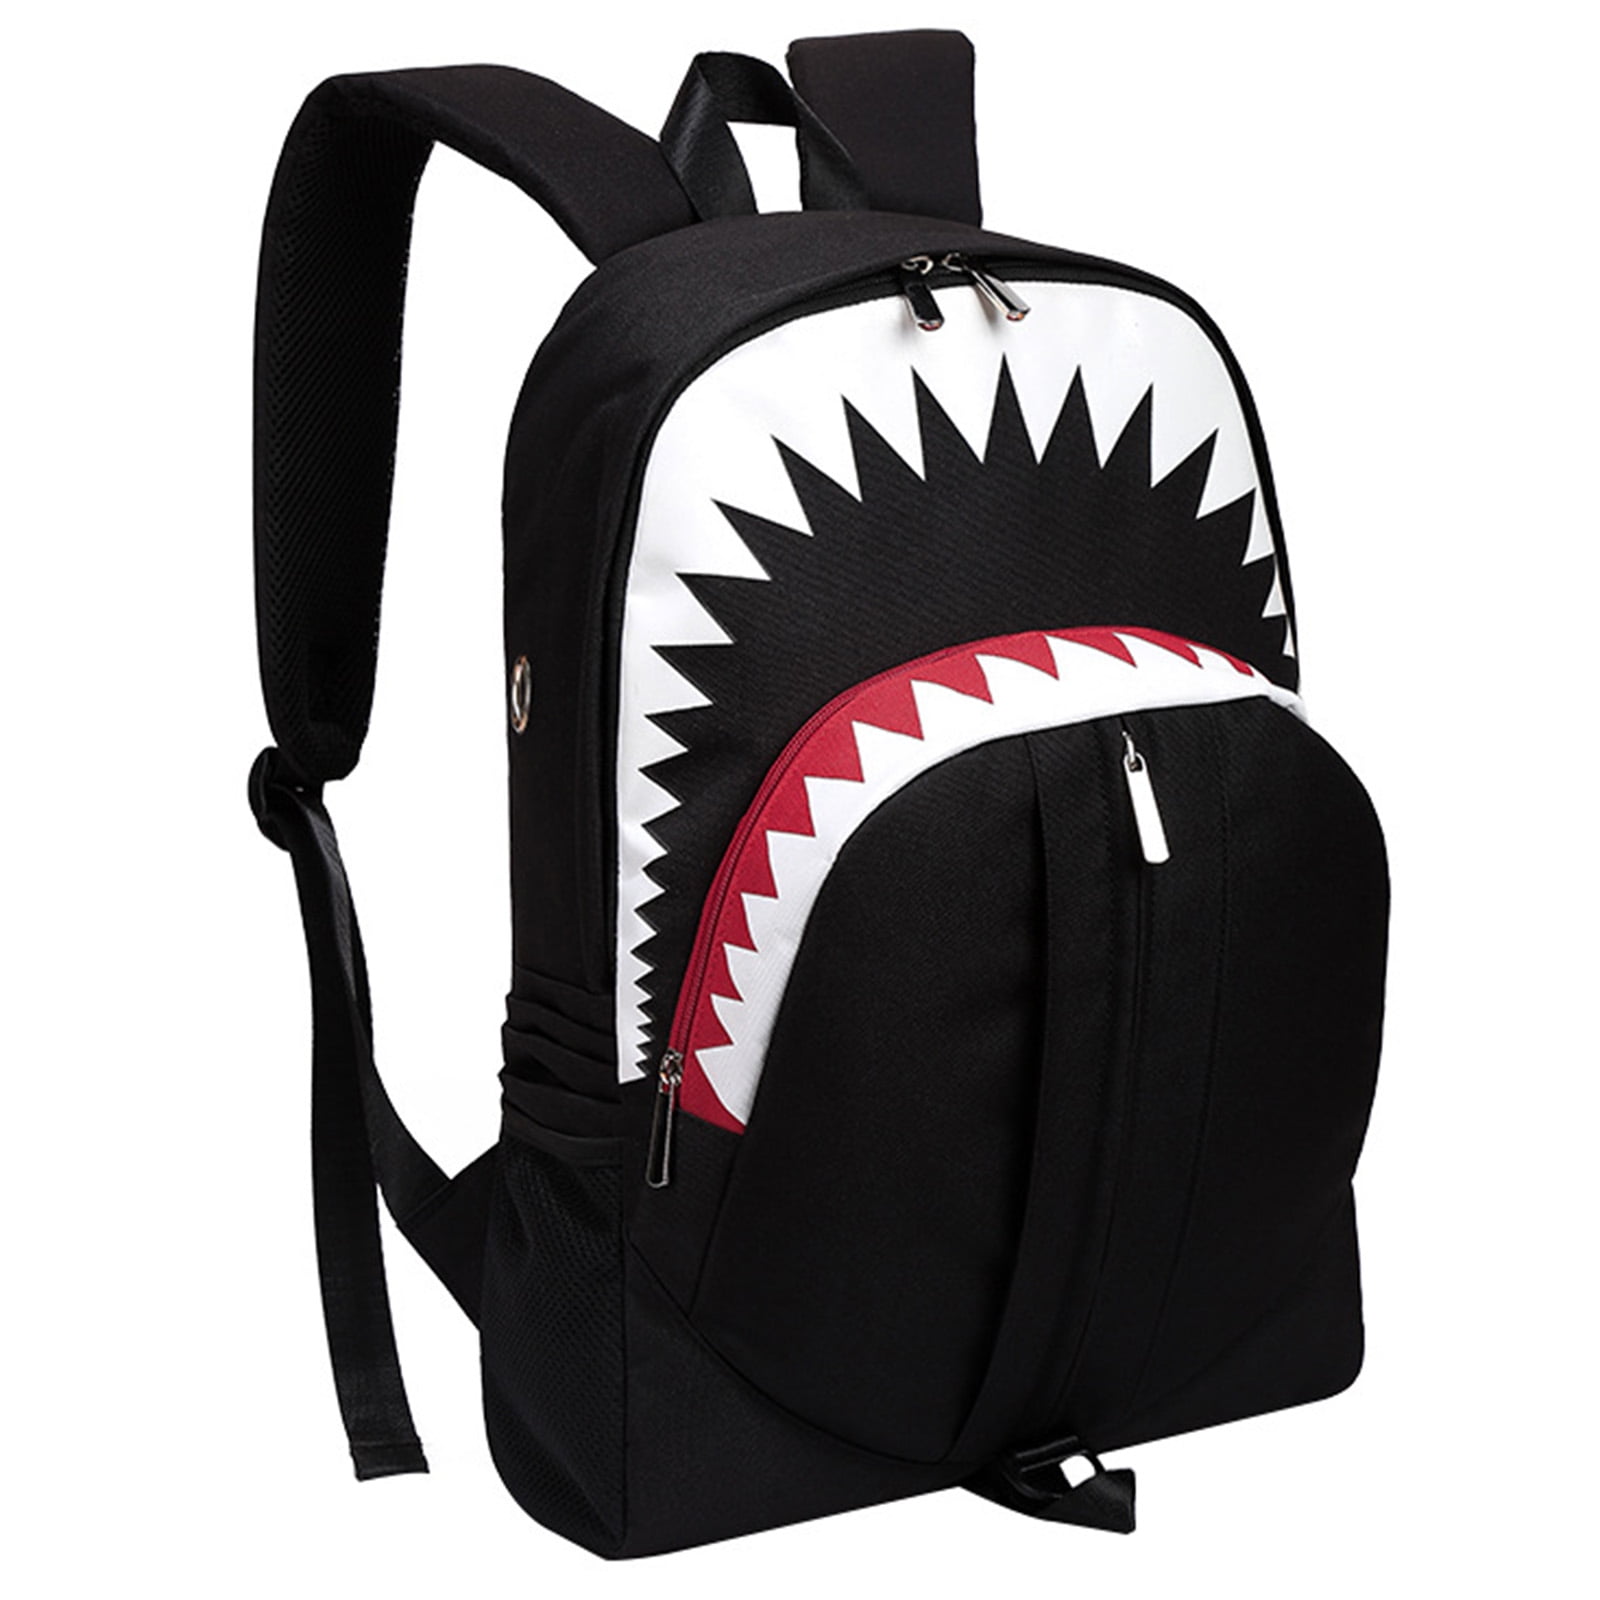 Shark Cotton Backpack Luisaviaroma Boys Accessories Bags Rucksacks 